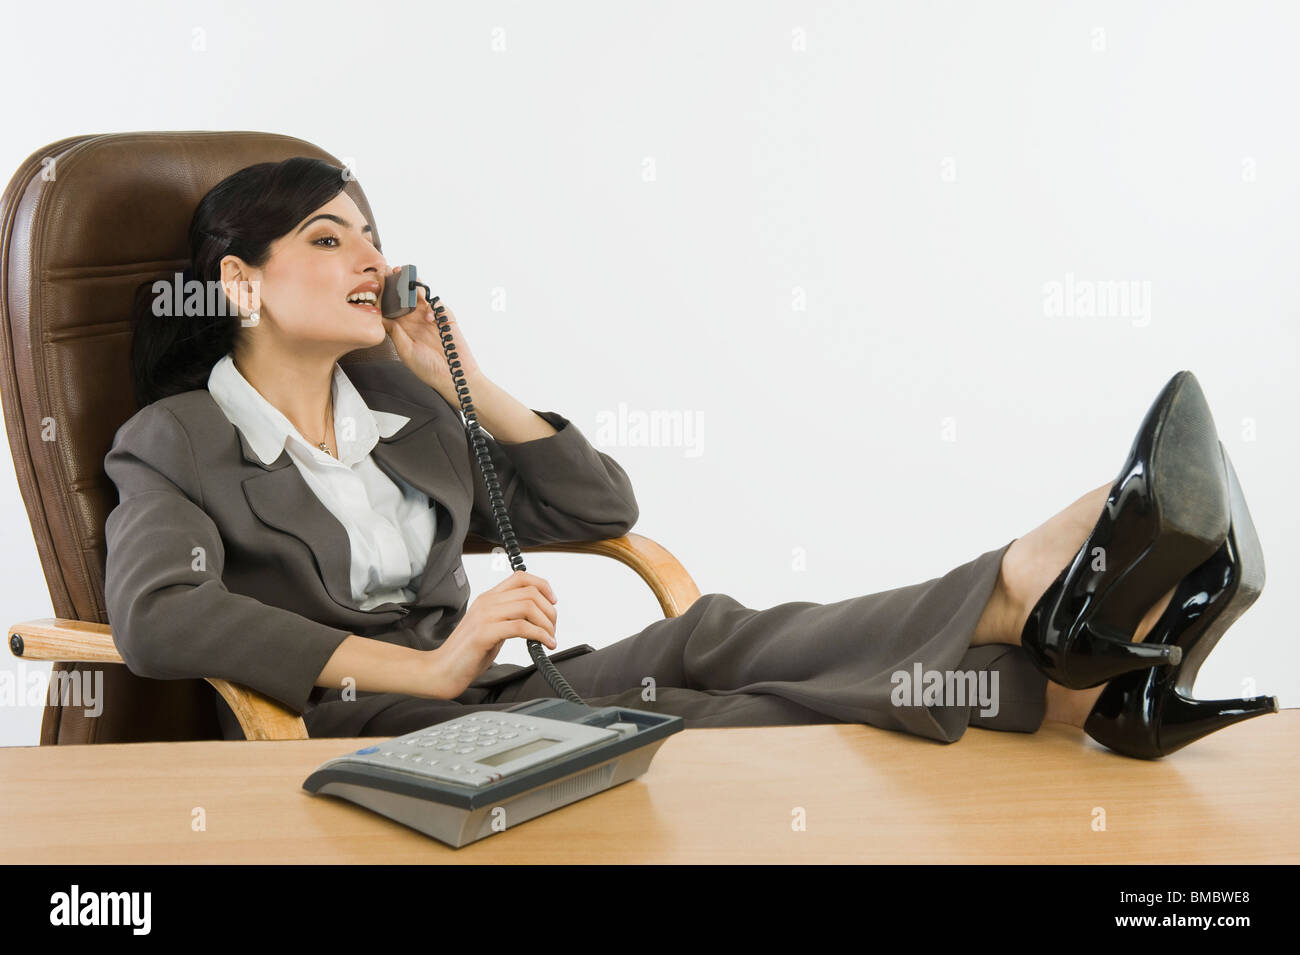 https://c8.alamy.com/comp/BMBWE8/businesswoman-talking-on-the-telephone-in-an-office-BMBWE8.jpg